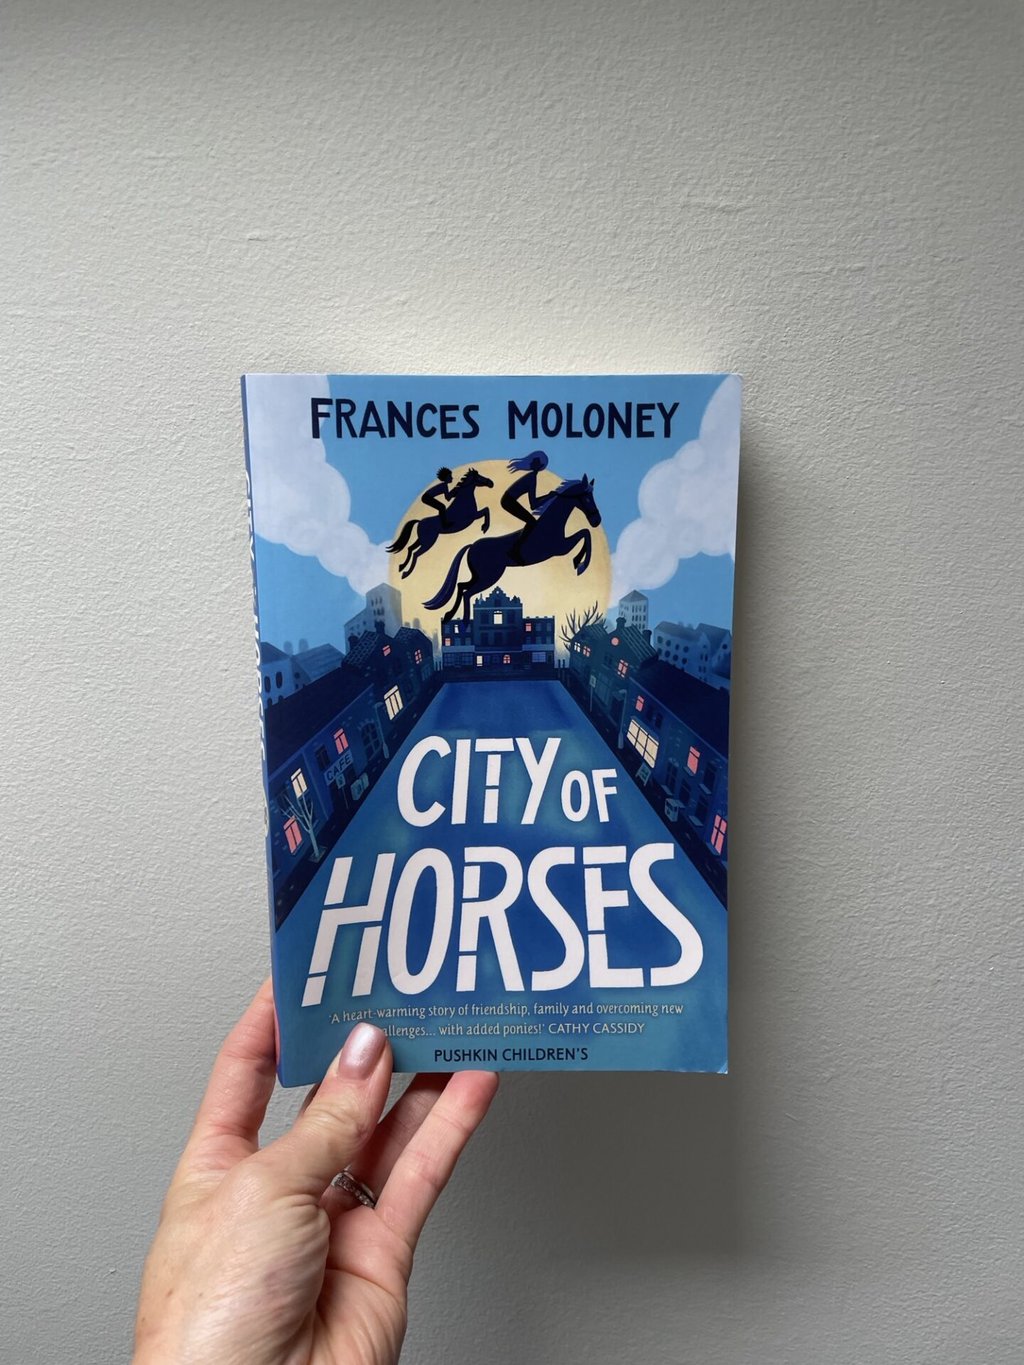 City of Horses - Frances Moloney